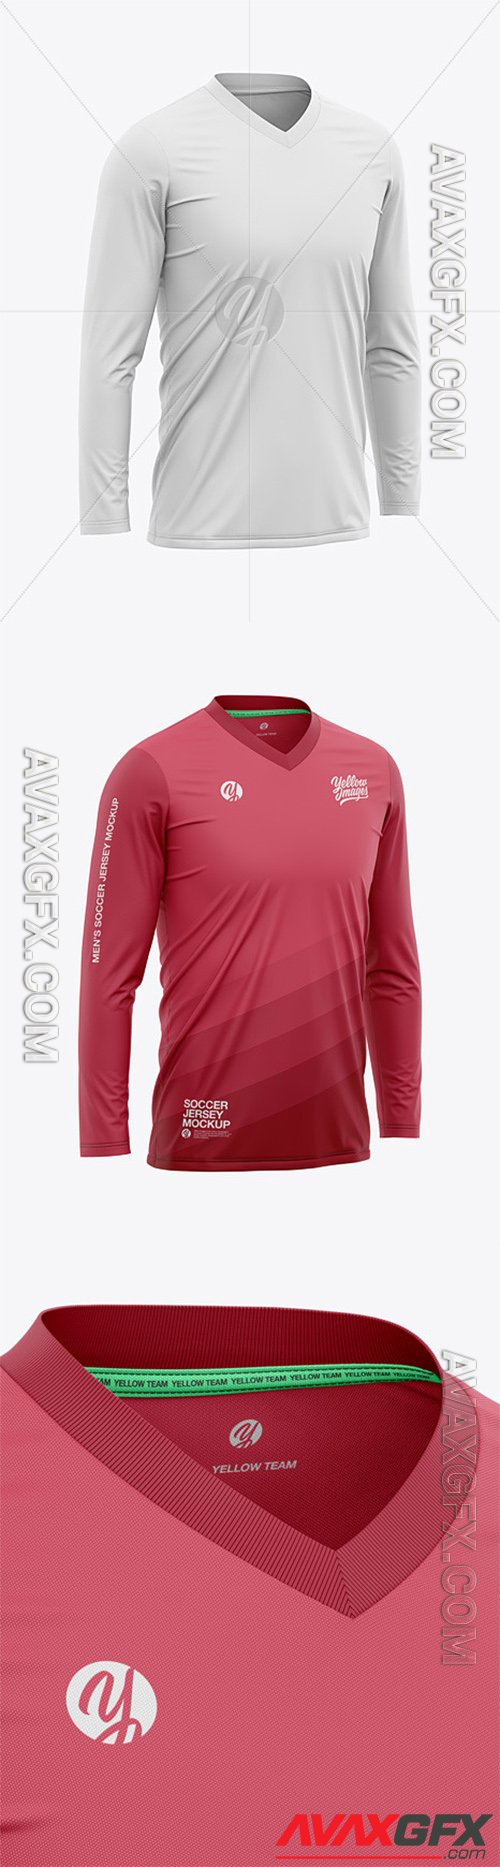 Men’s Long Sleeve Soccer Jersey T-shirt Mockup - Front Half-Side View 56830